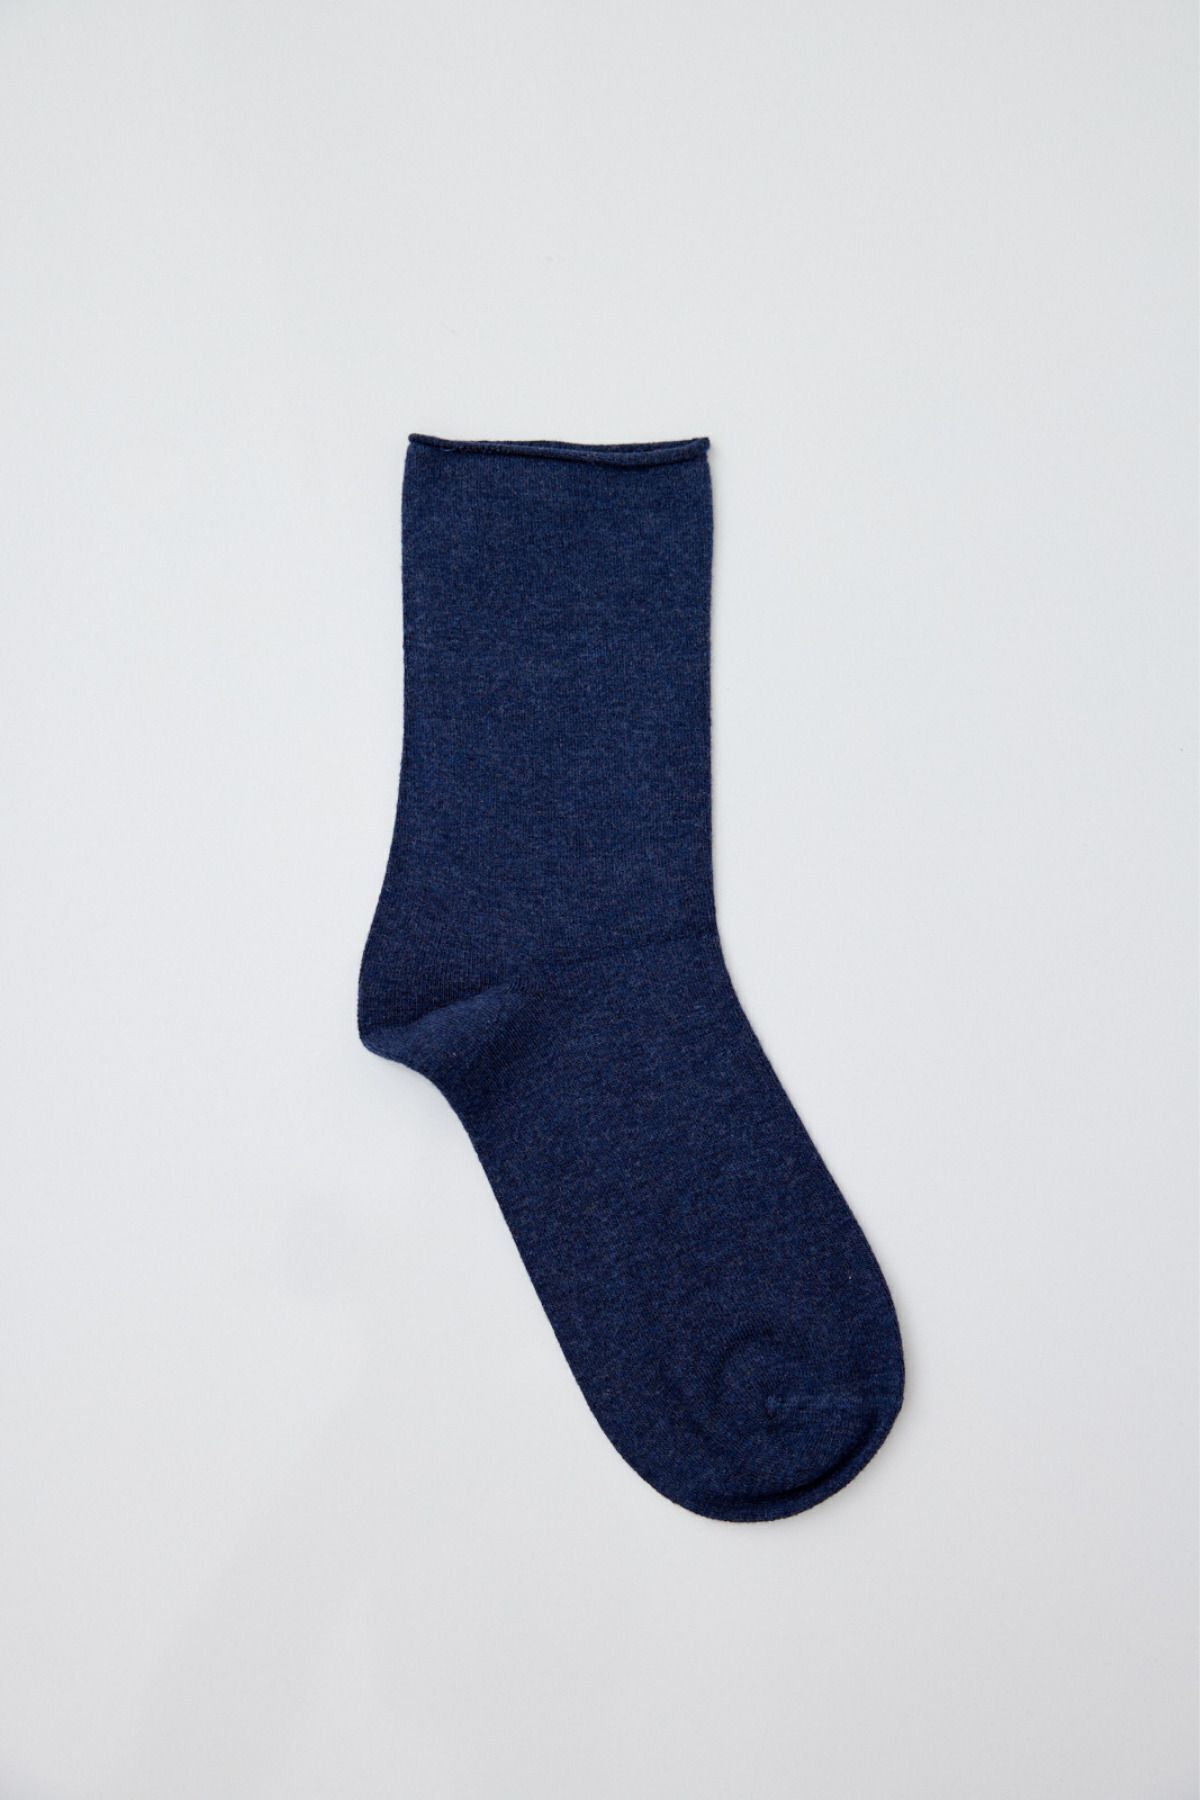 Katia & Bony Kadın Basic Modal Soket Çorap Lacivert Melanj